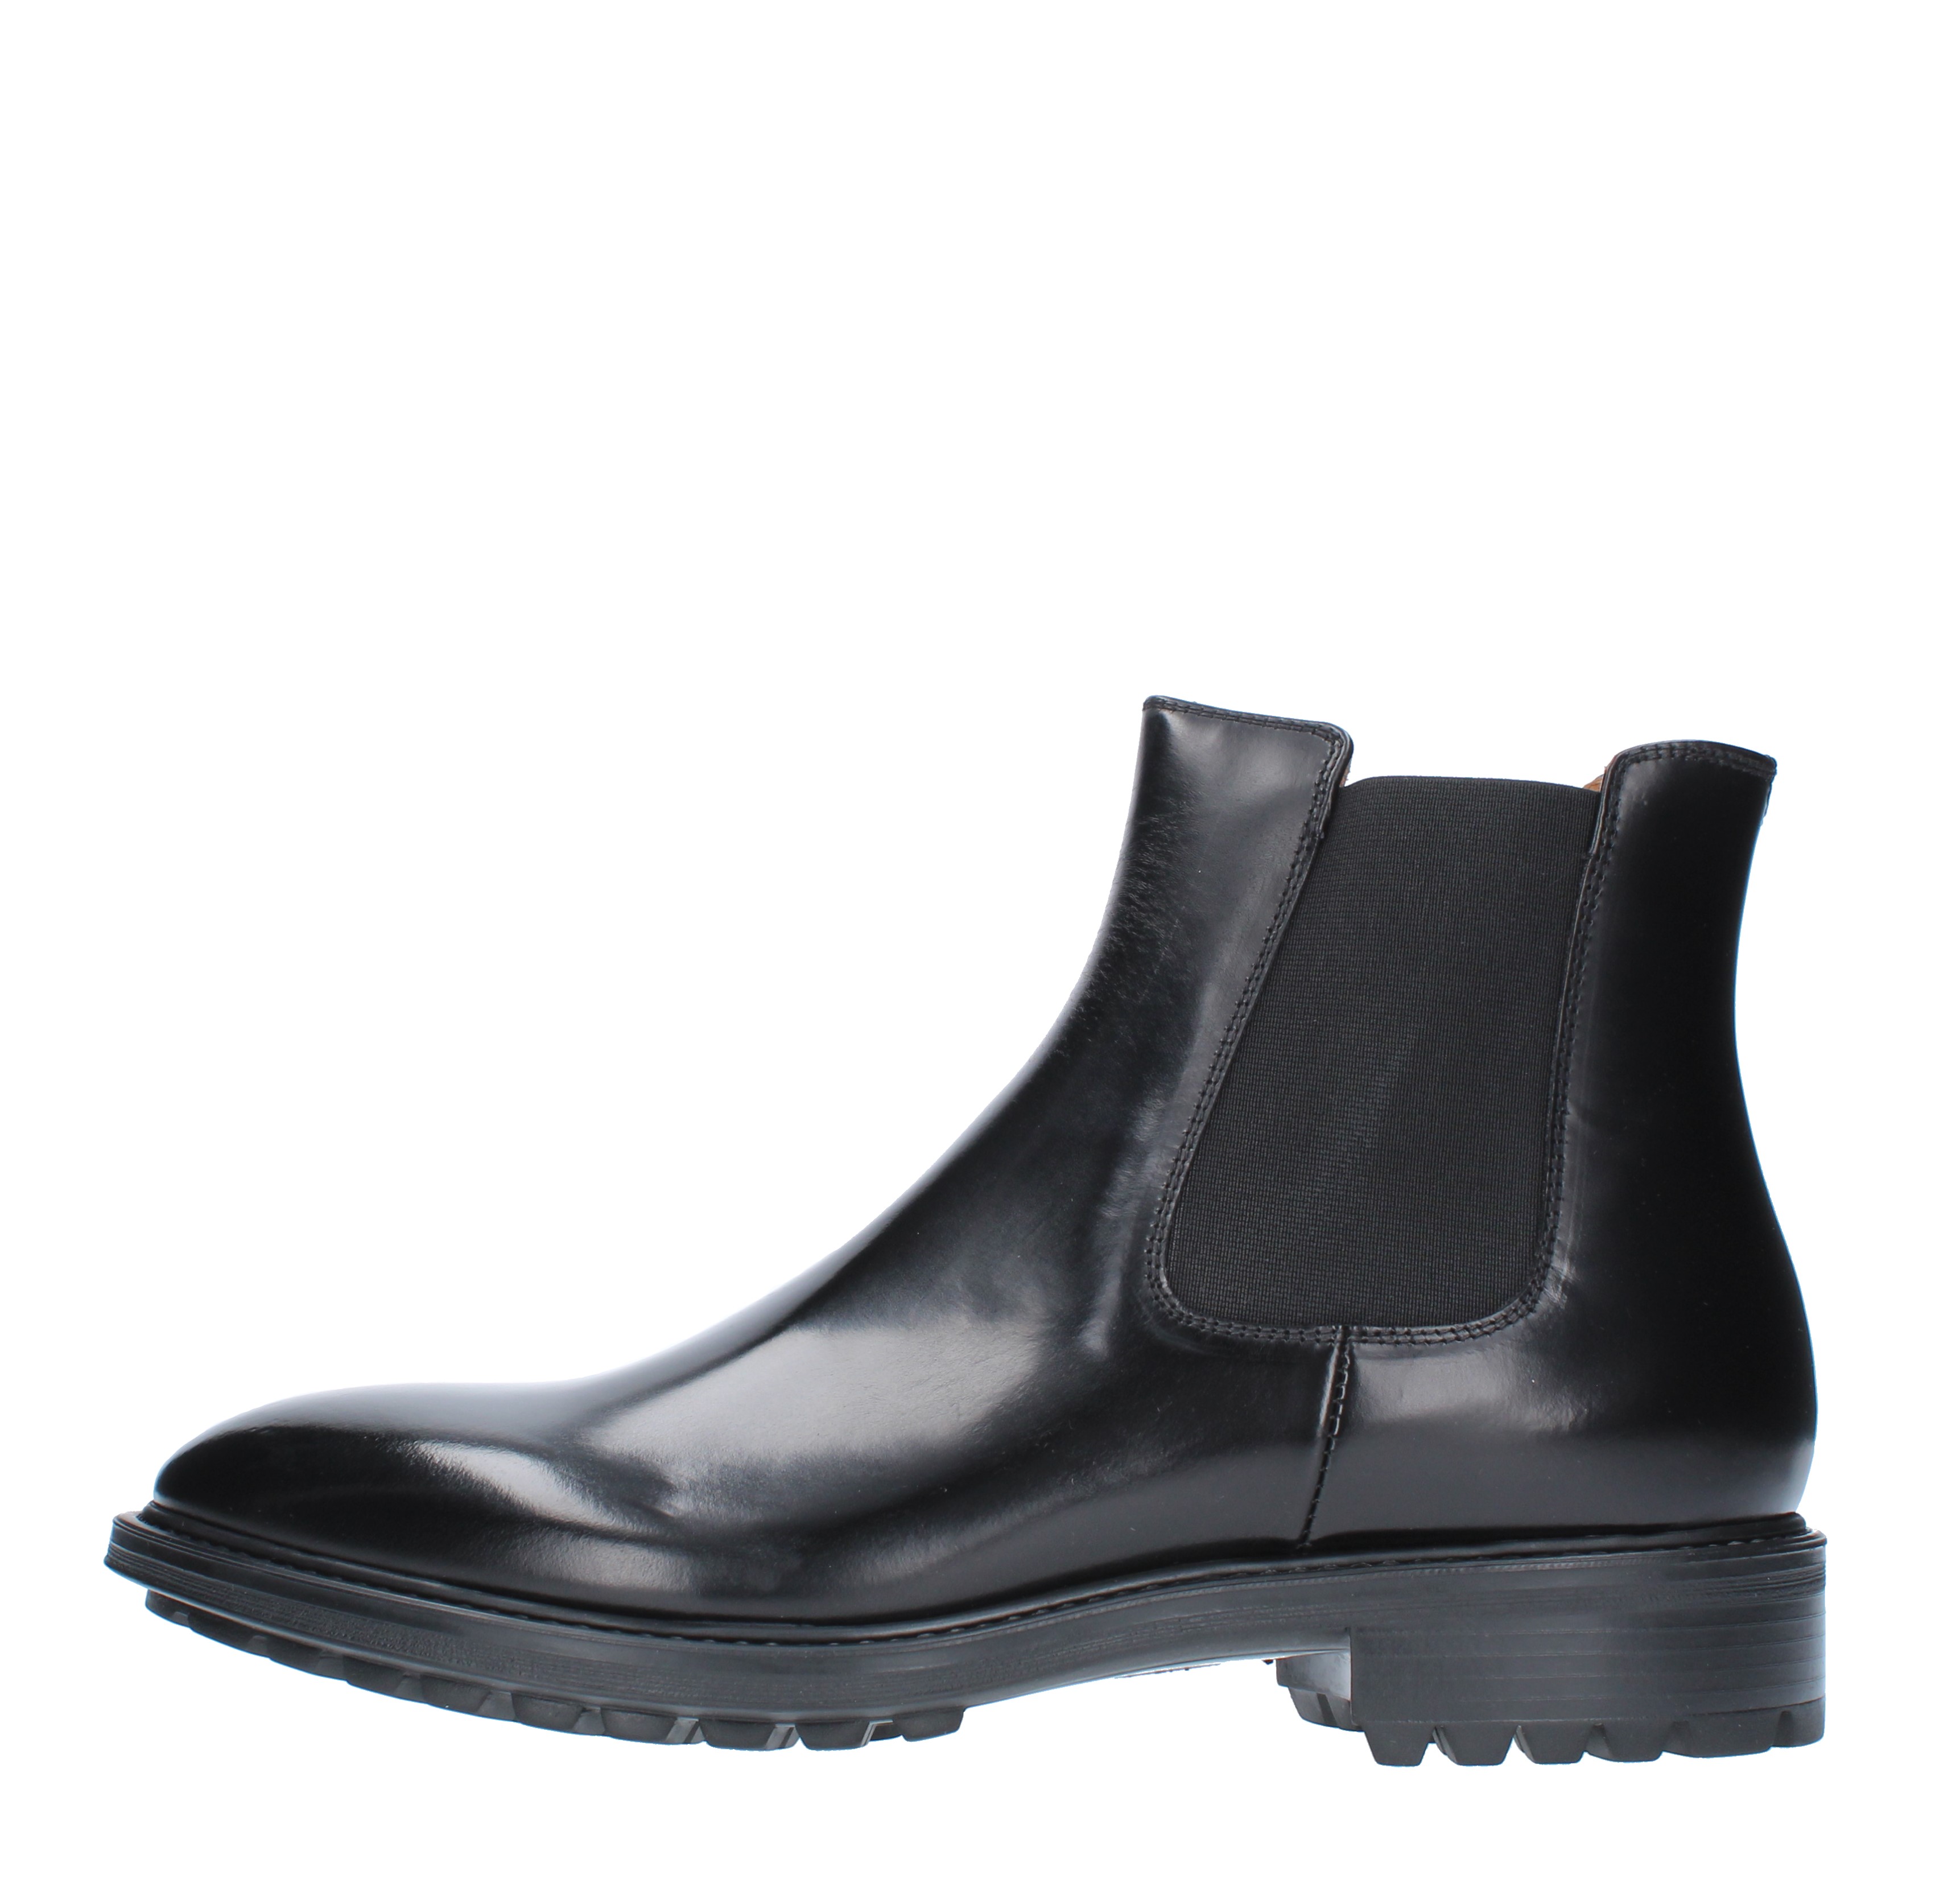 Stivaletti Beatles modello DU1343GENOUF007NN00 in pelle e tessuto - DOUCAL'S  - Ginevra calzature